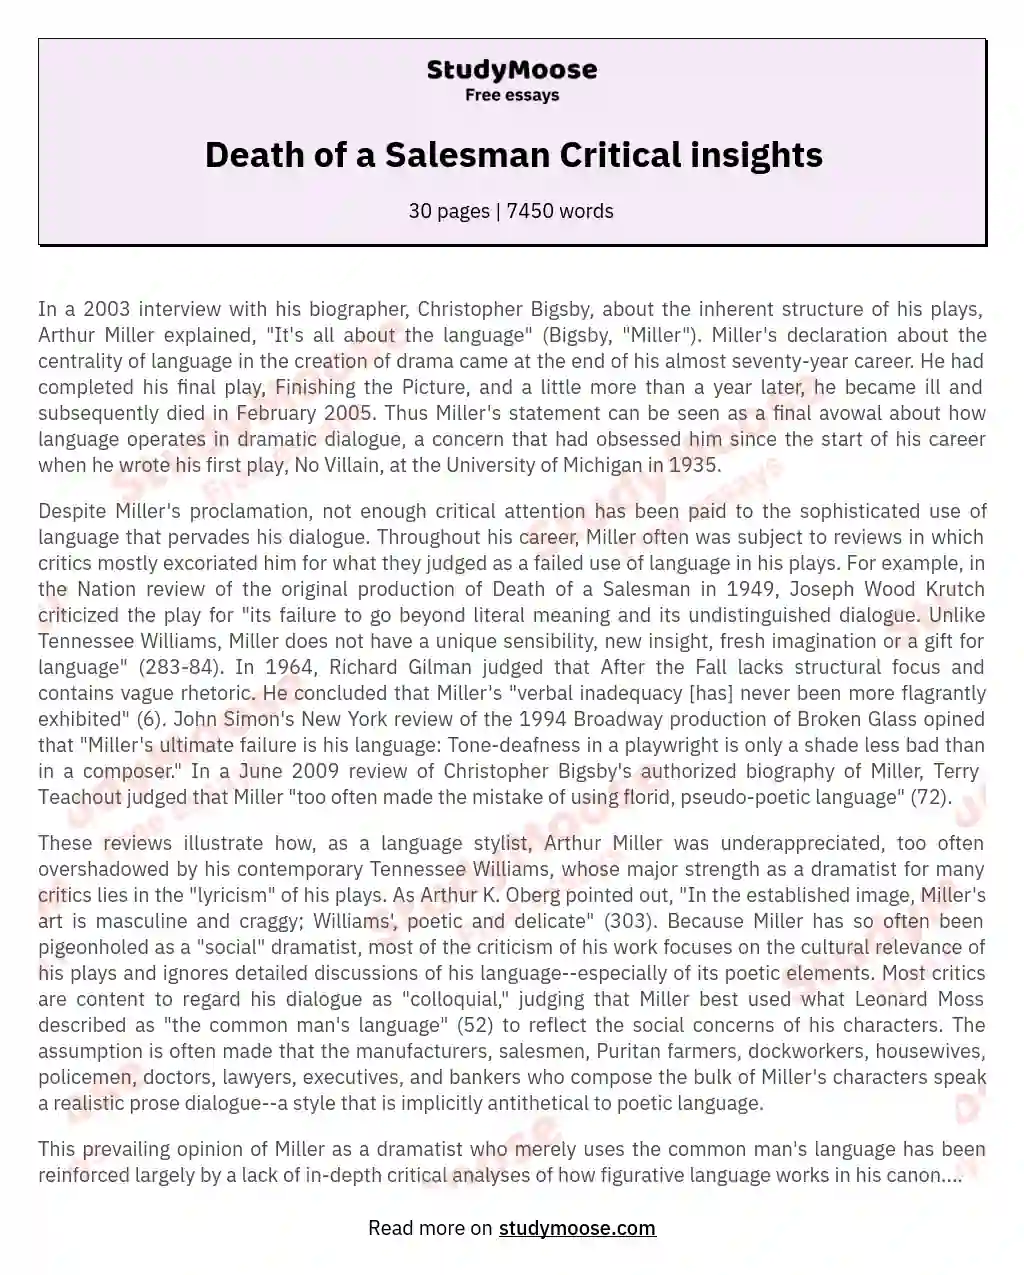 Death of a Salesman Critical insights essay